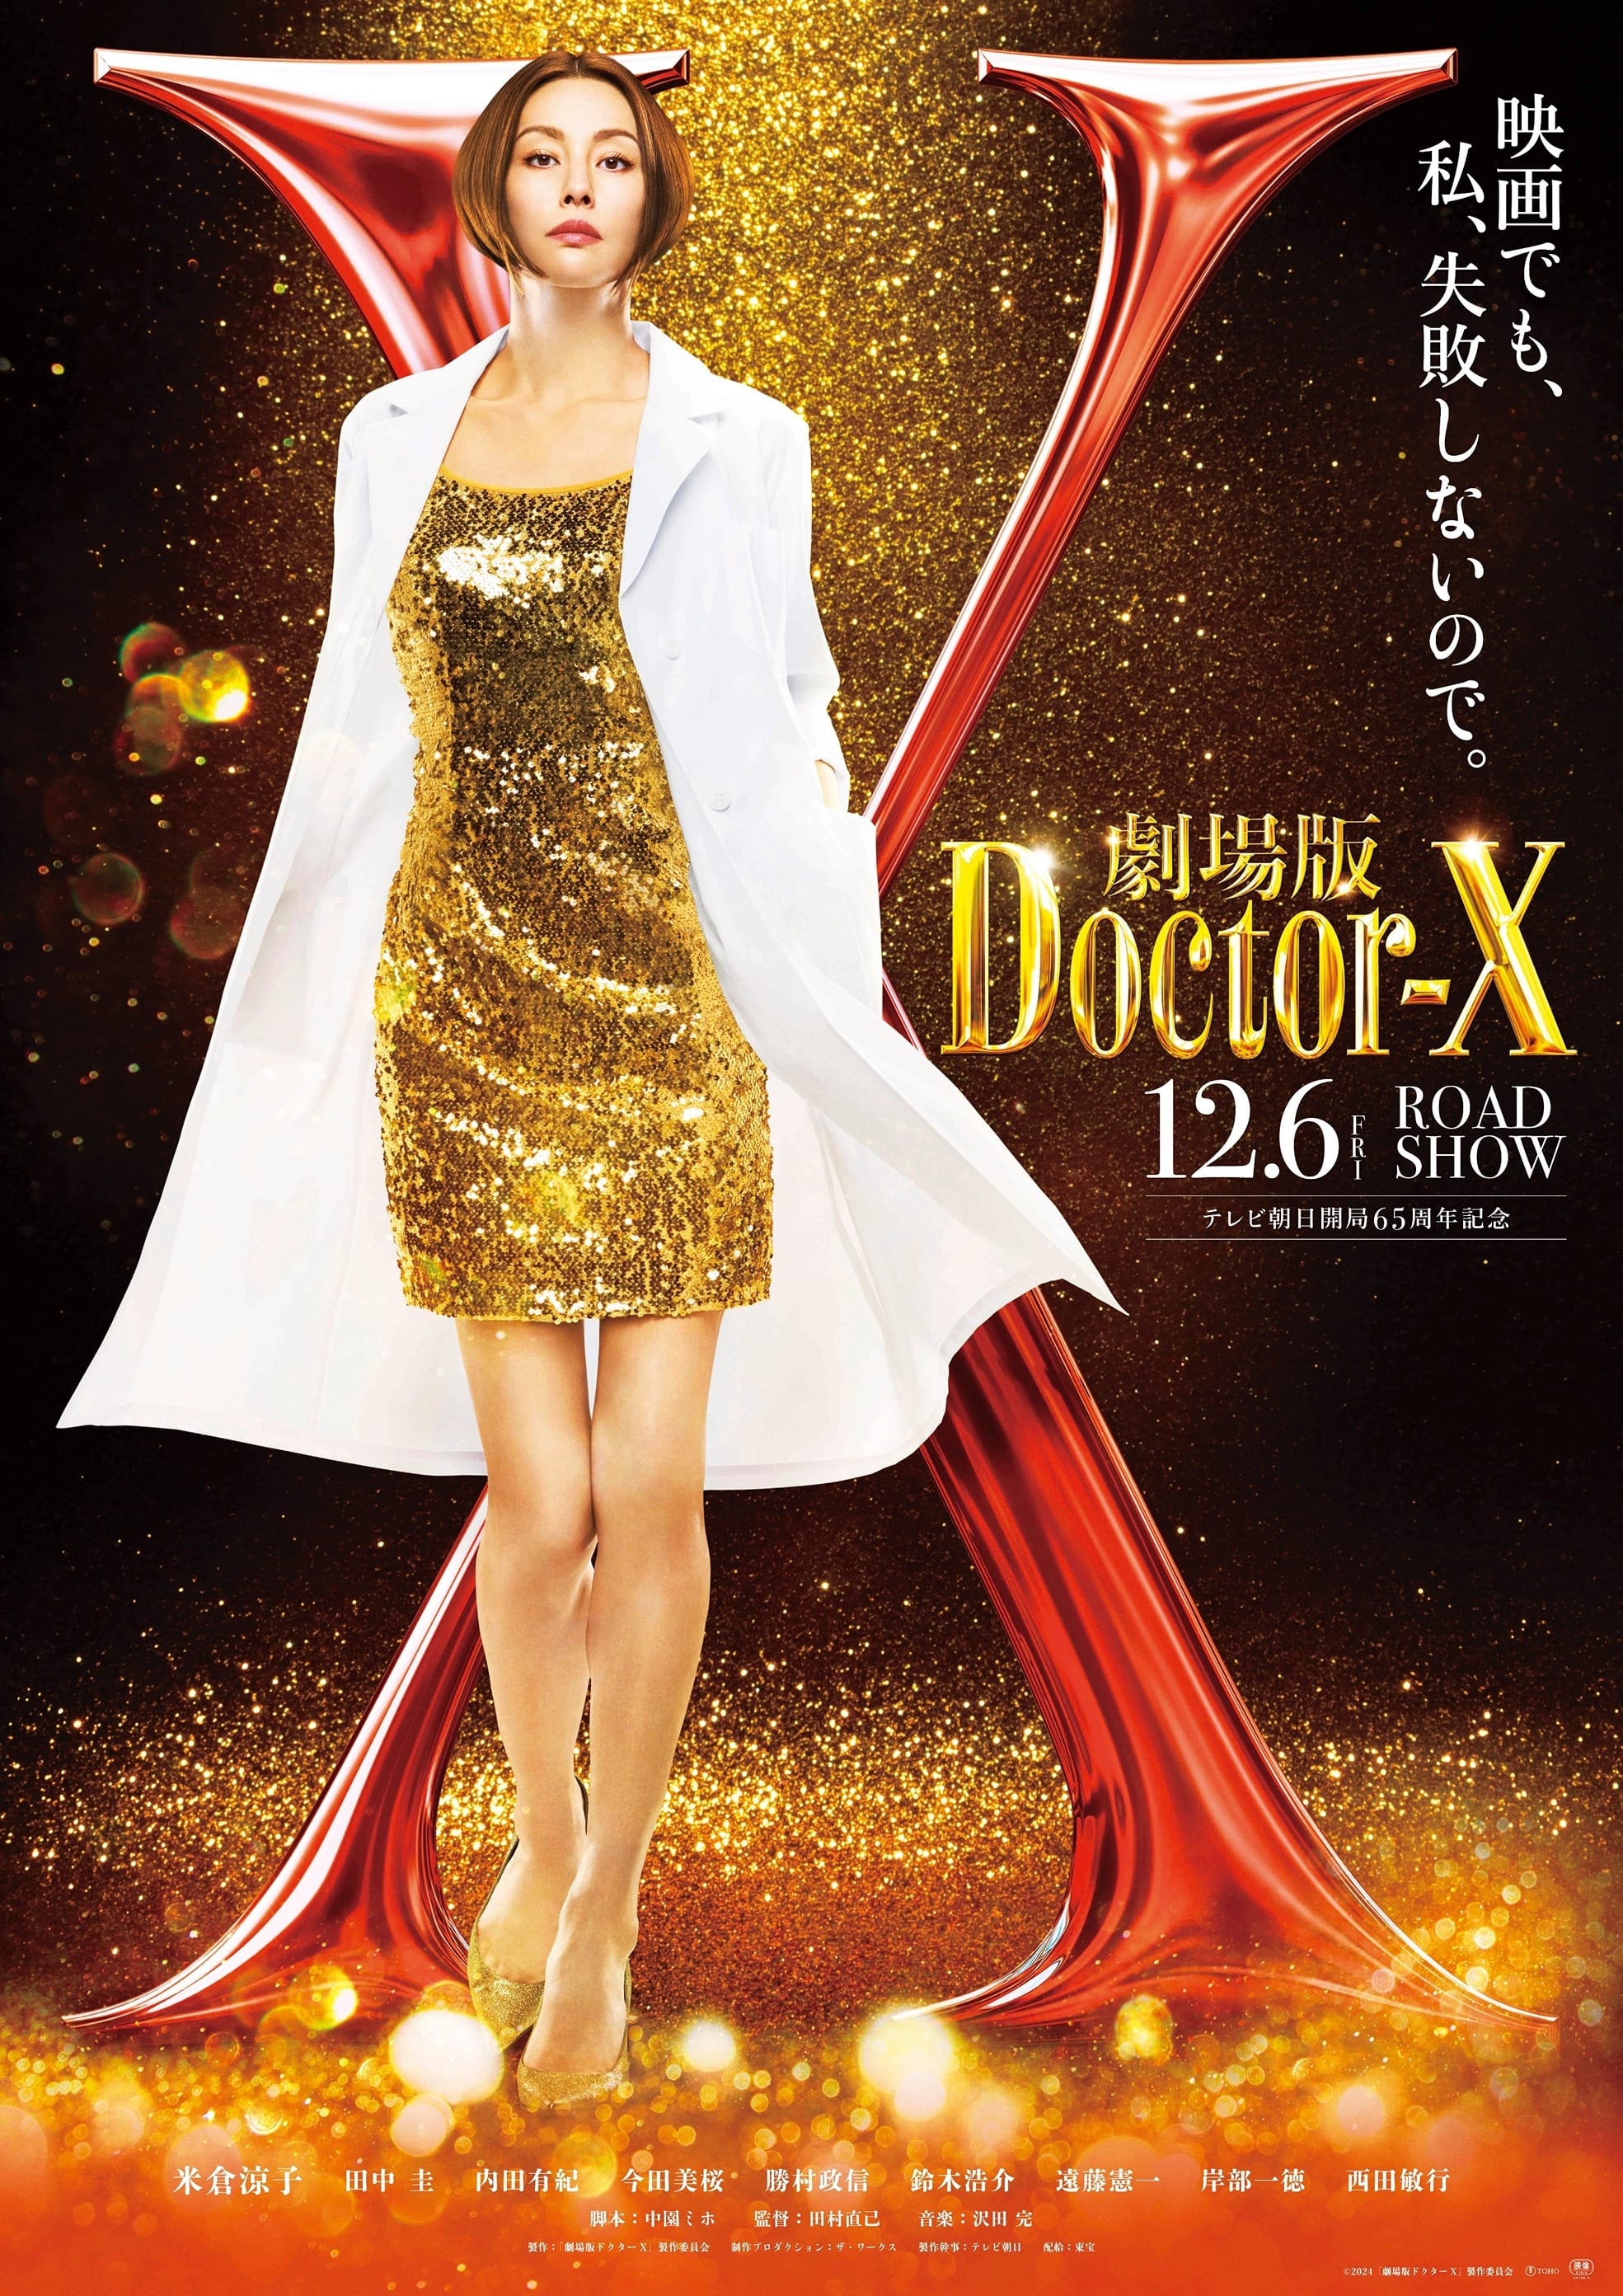 Doctor-X